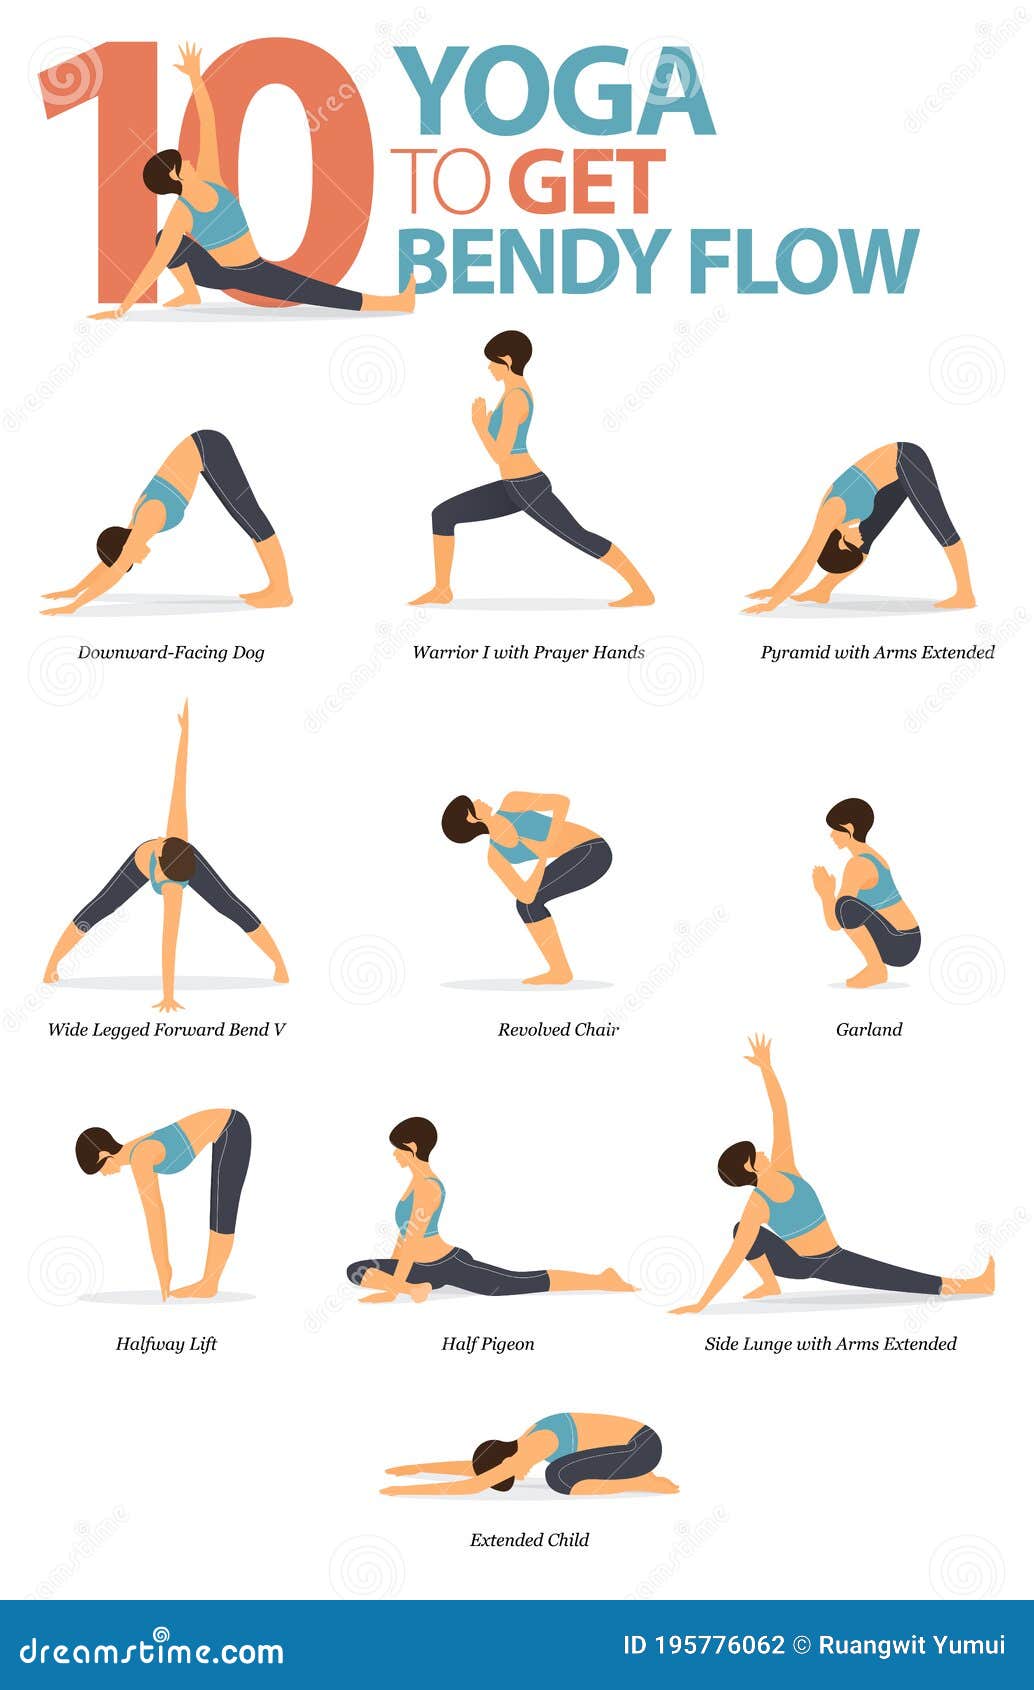 10 Basic Hatha Yoga Poses for Beginners | FITPASS